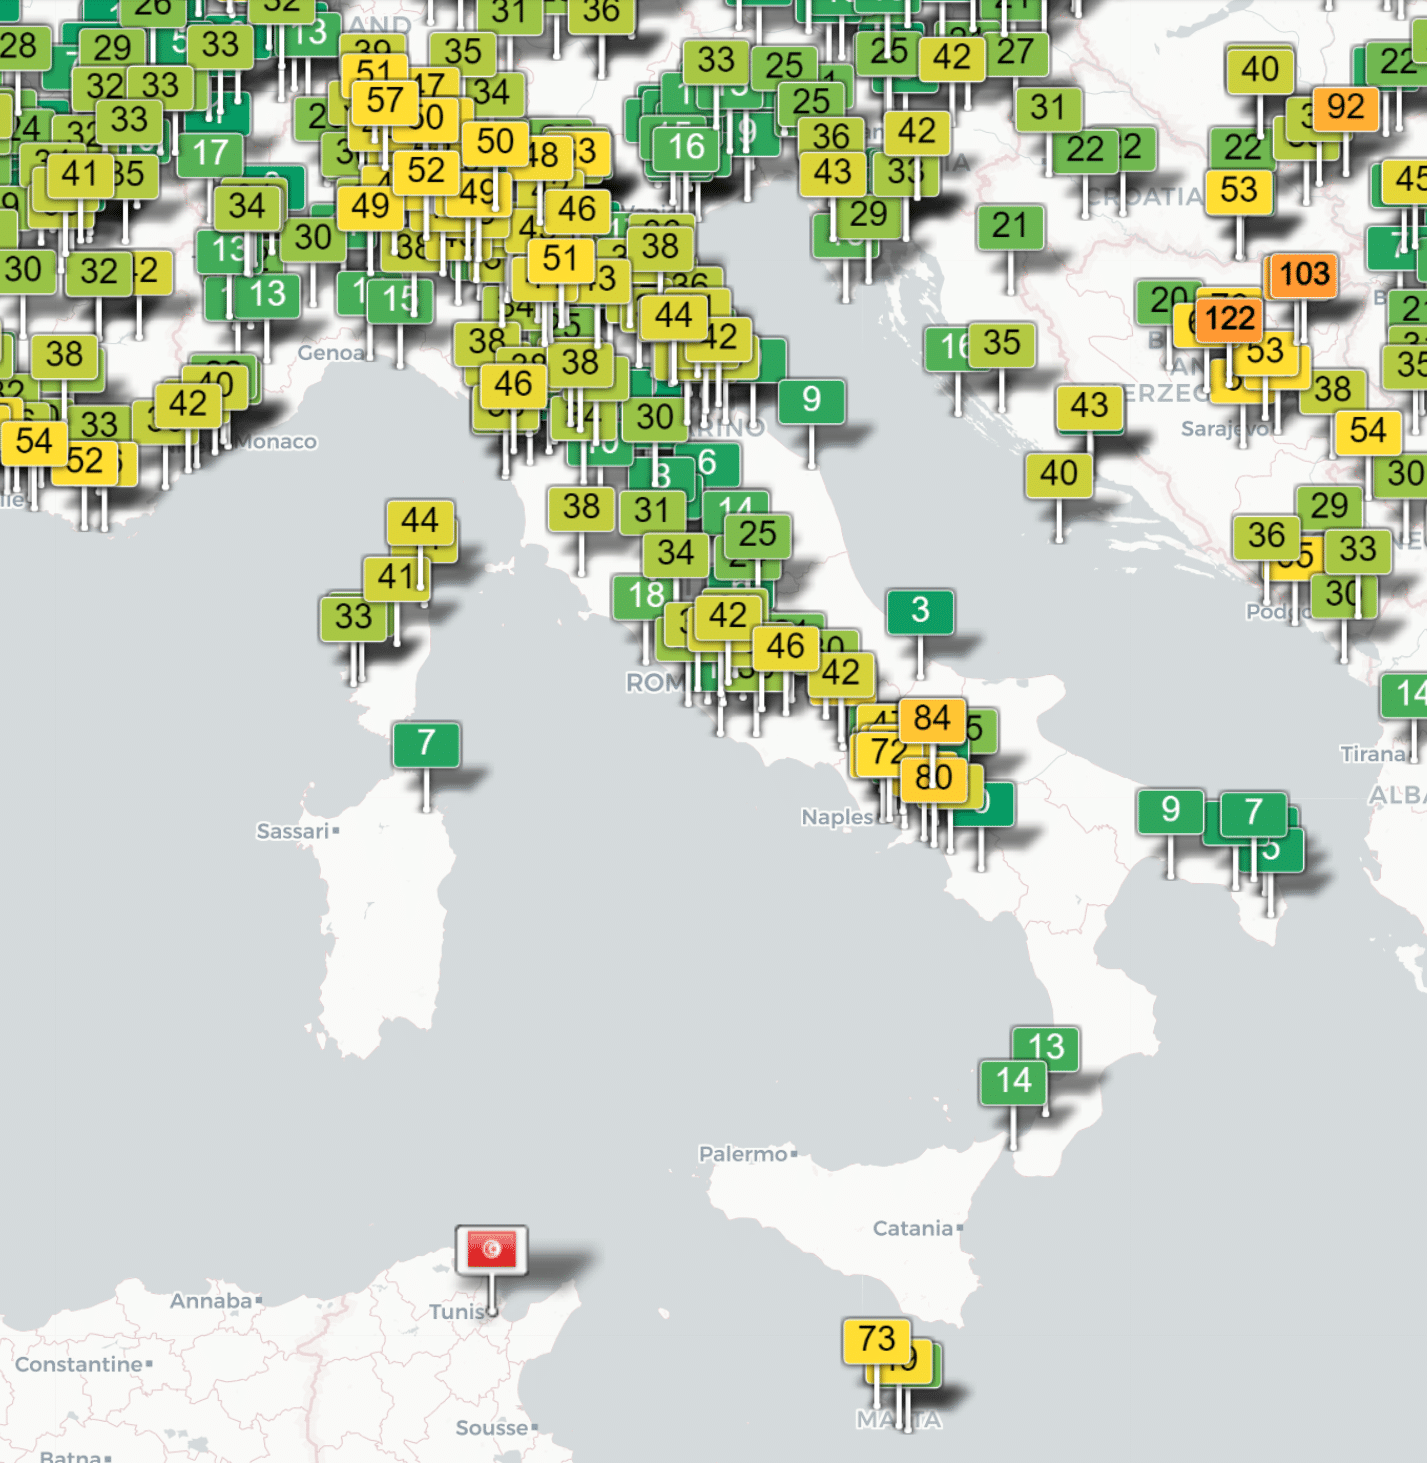 World Air Quality Index